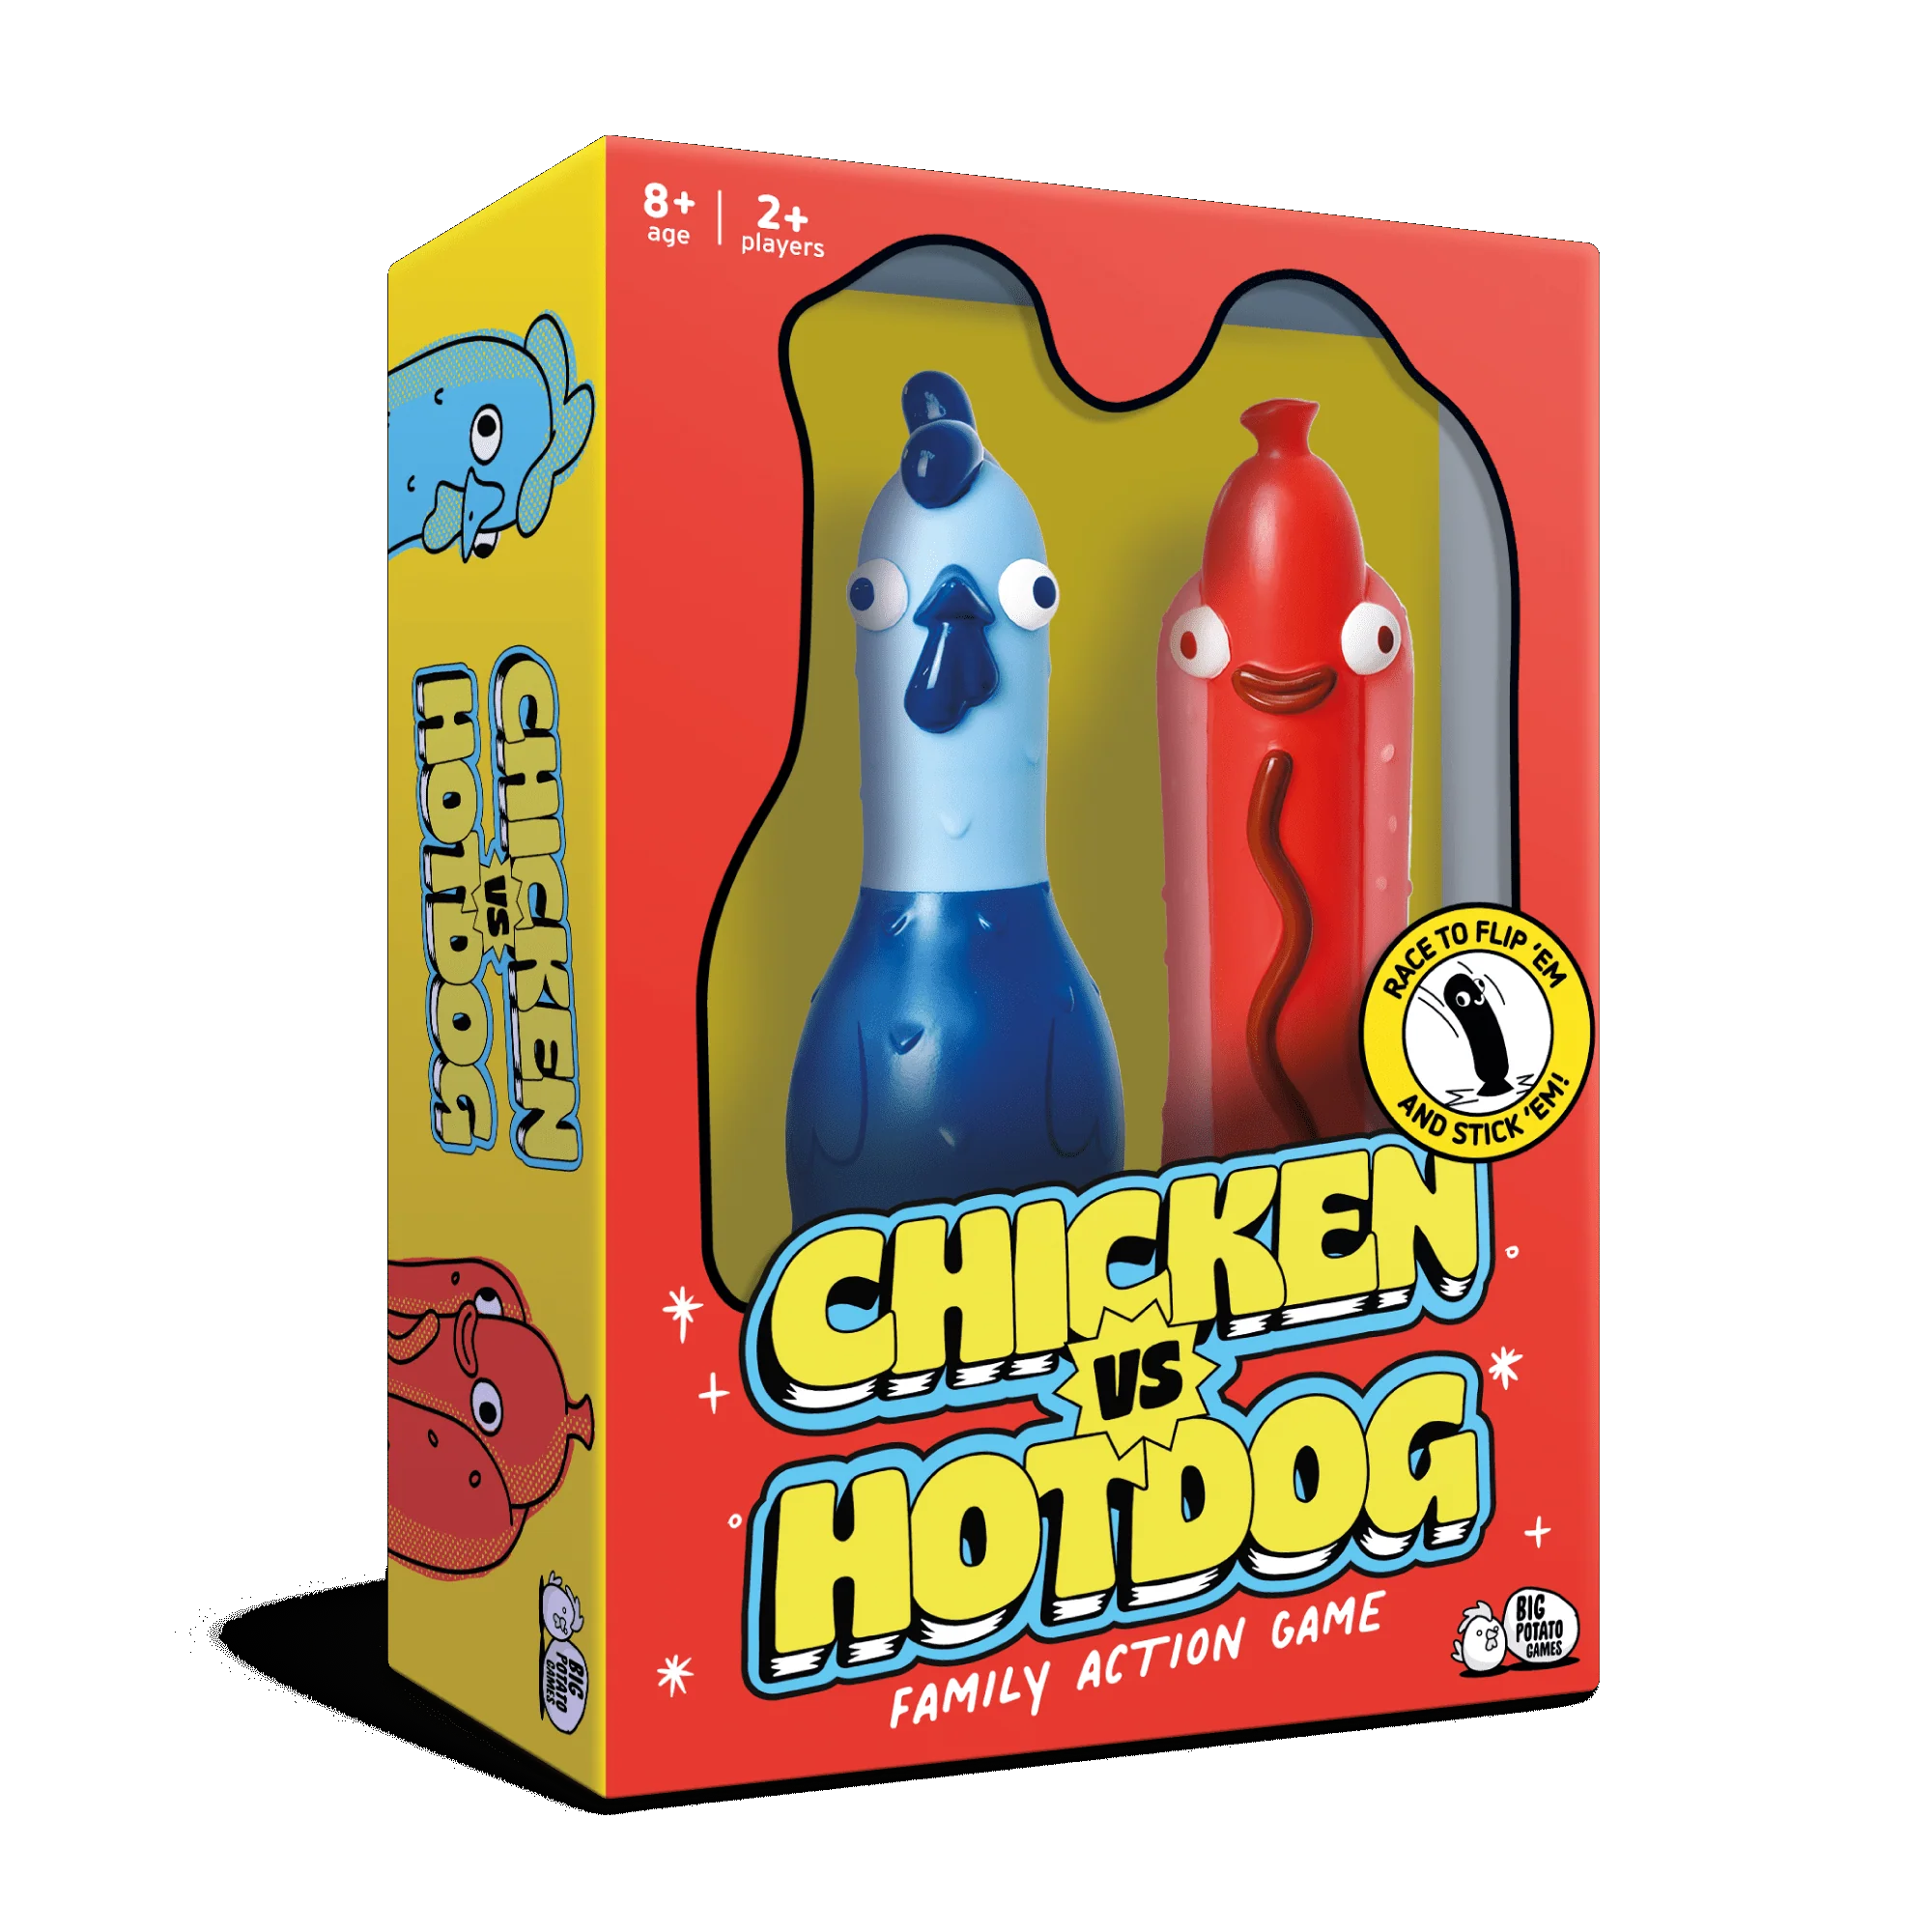 Chicken Vs Hot Dog